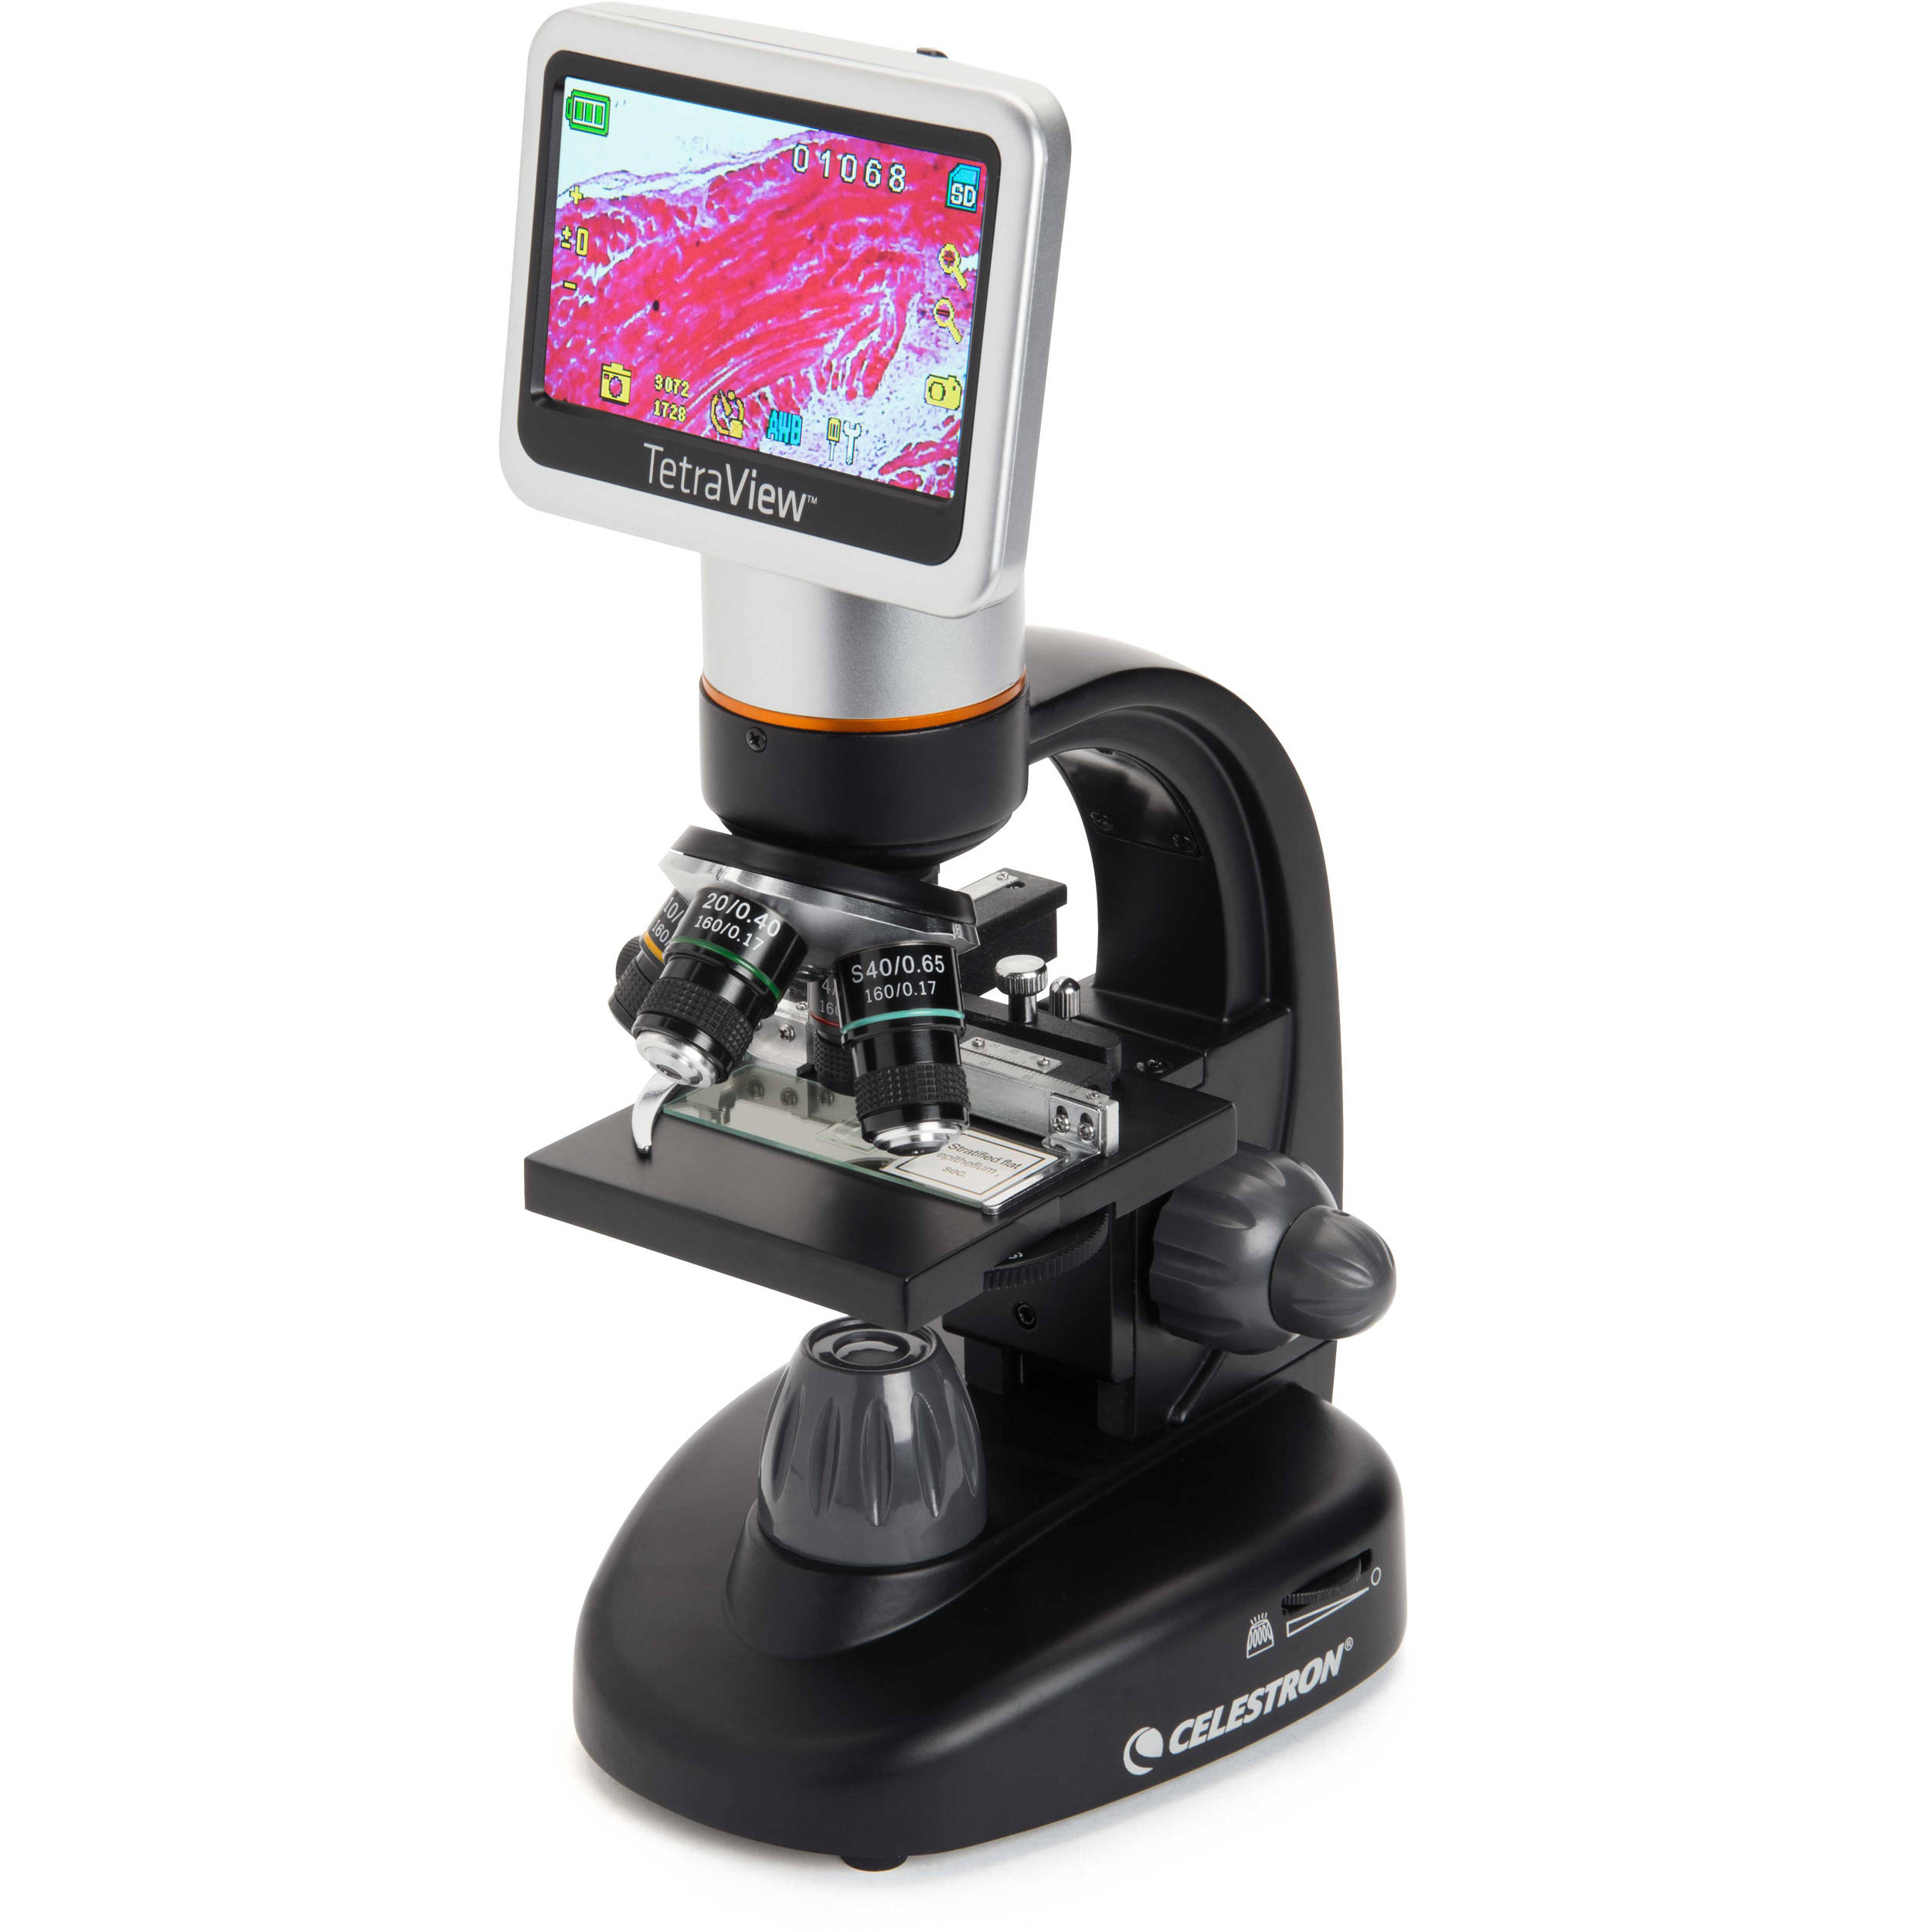 Celestron TetraView 5.0MP Cordless Digital Microscope 44347 B&H